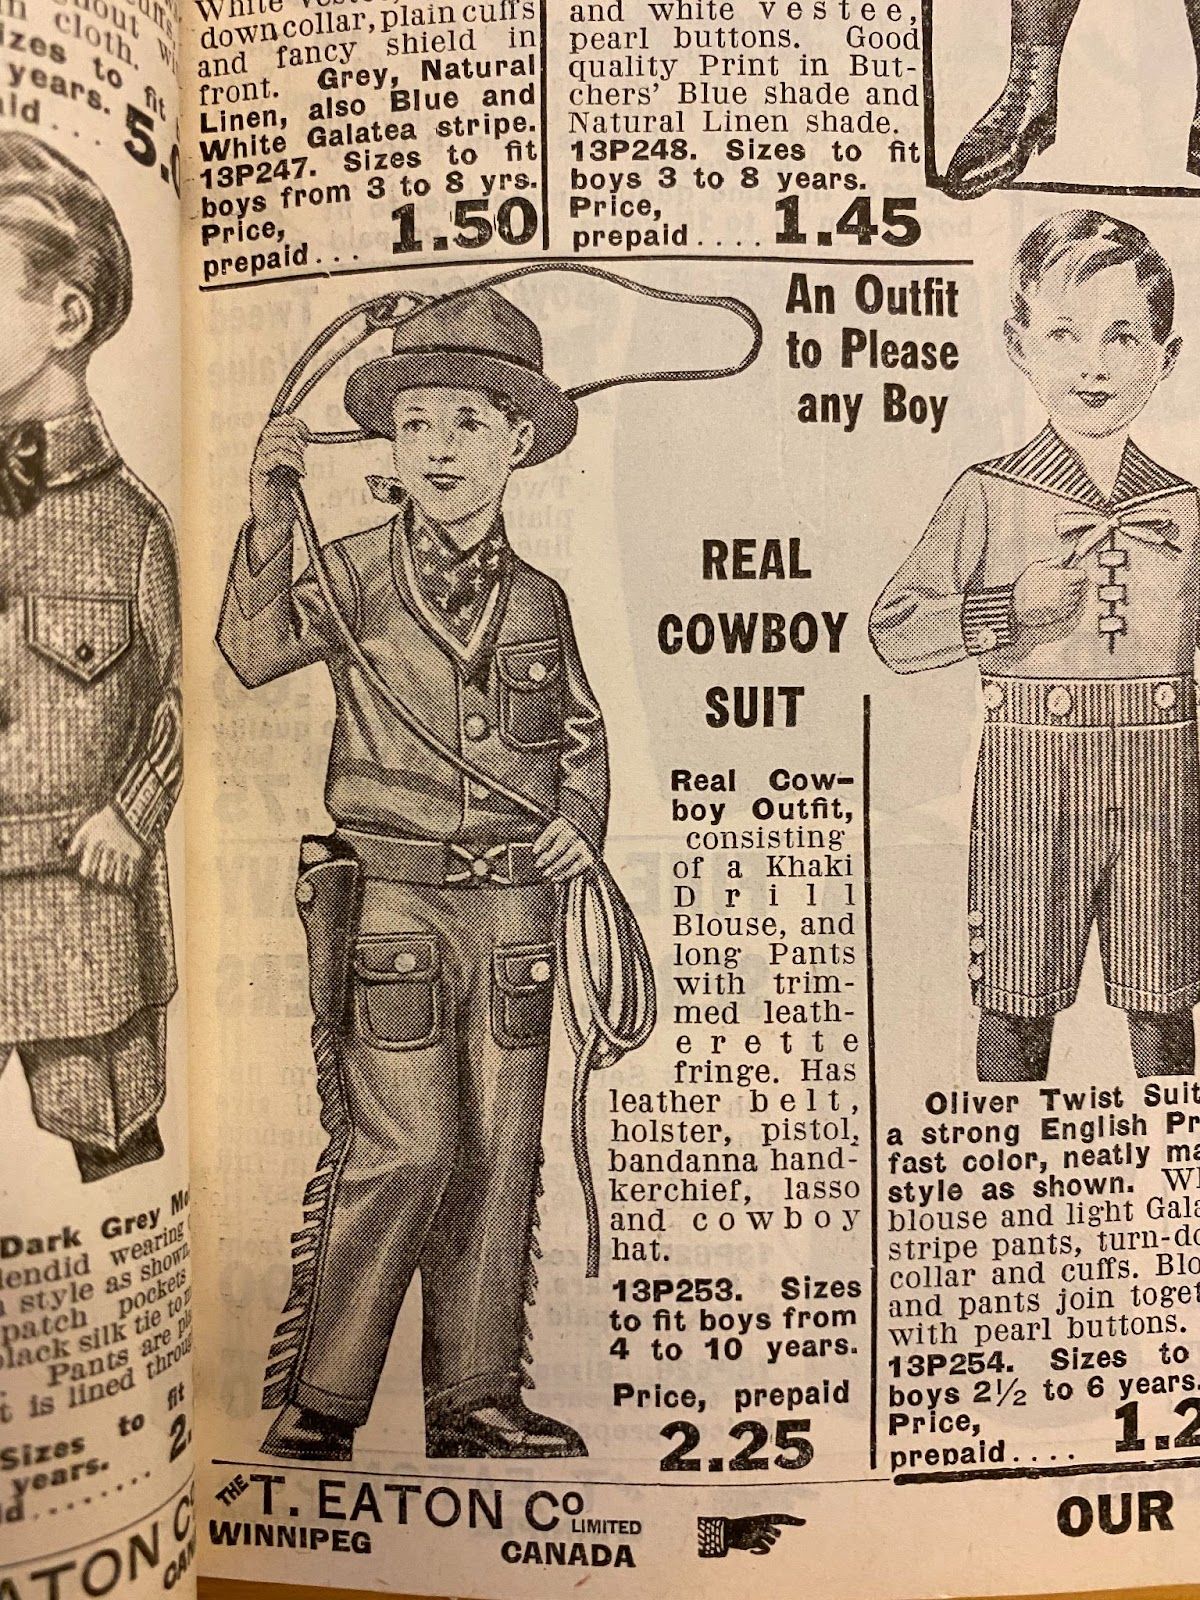 A Cowboy Outfit De Luxe